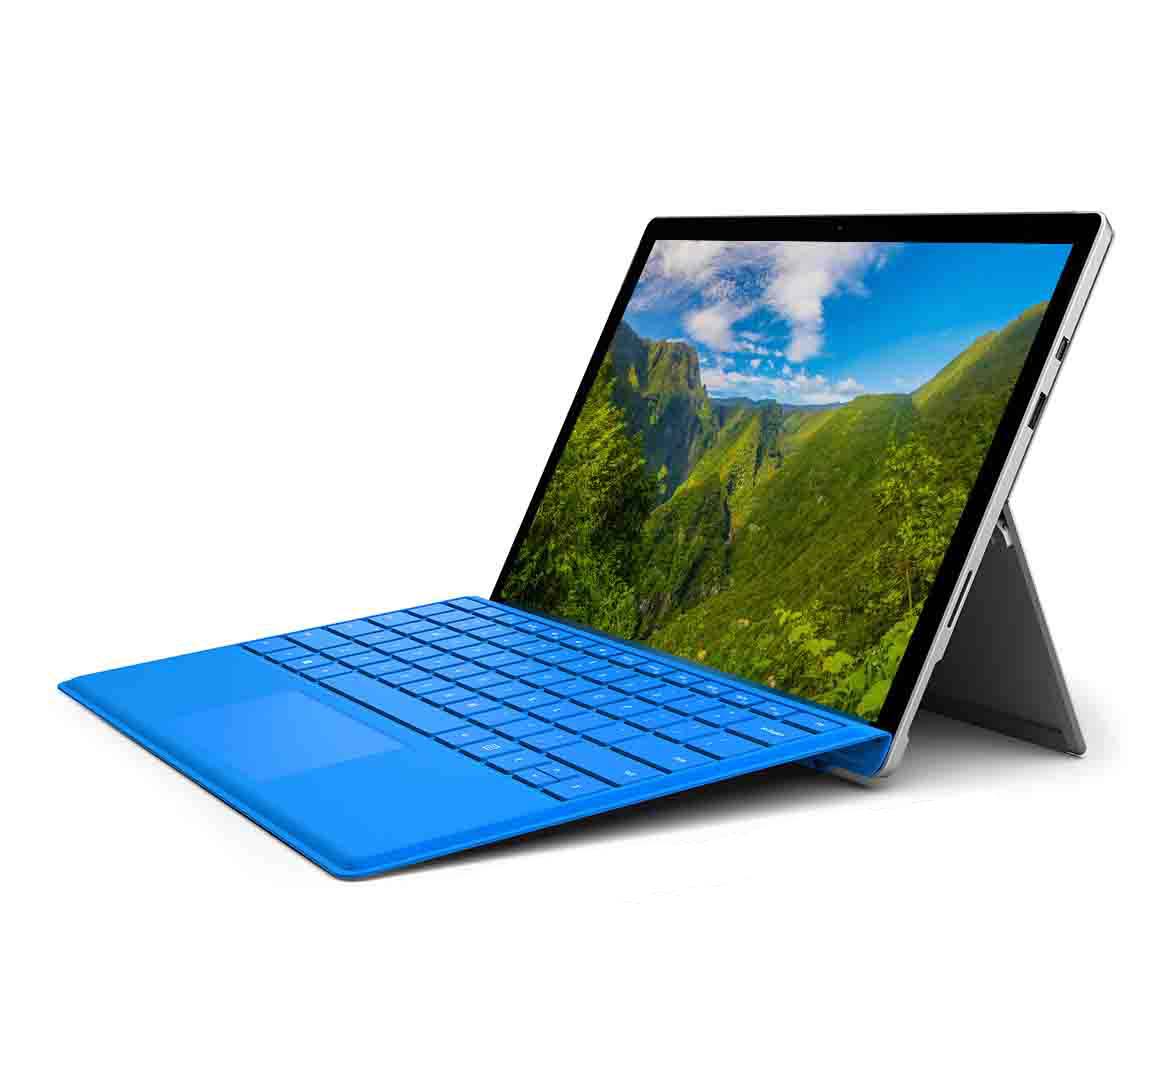 Microsoft Surface Pro 4 Business Laptop, Intel Core M Series CPU